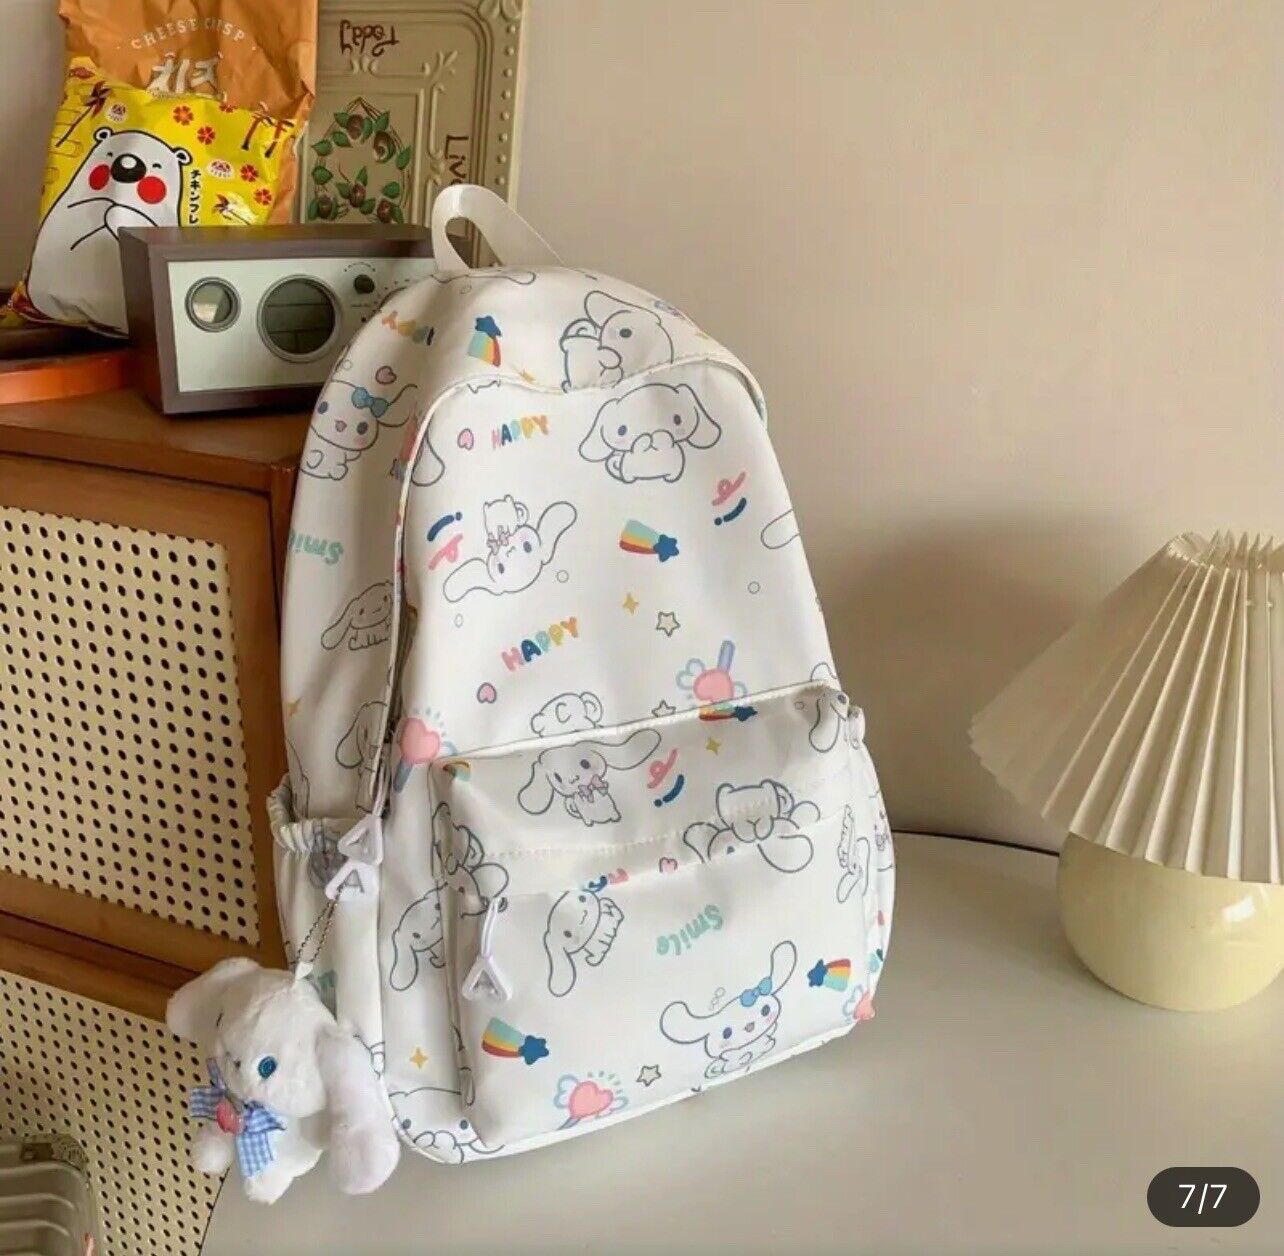 Cute Sanrio Cinnamoroll Patterned Backpack Bag White Back To School W Charm